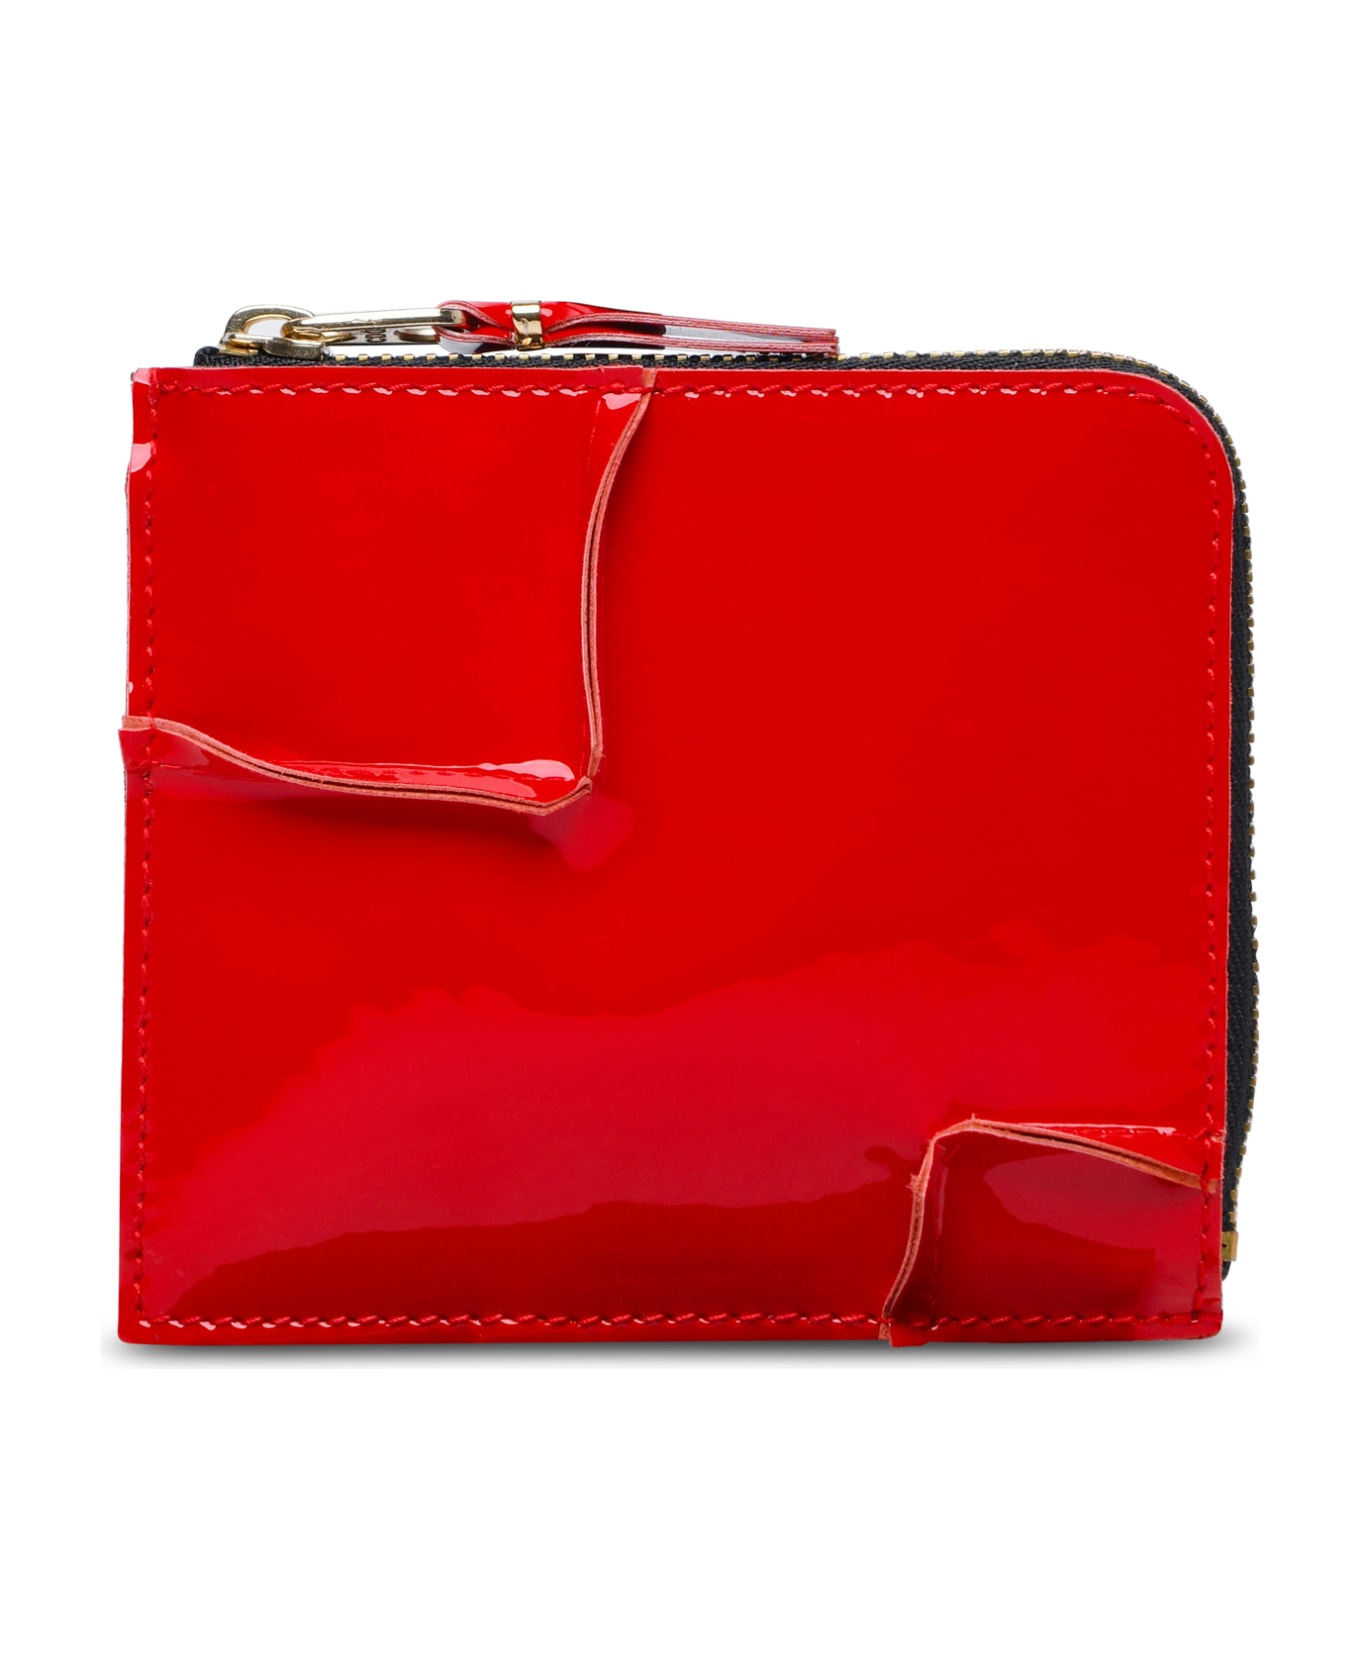 Comme des Garçons Wallet 'medley' Red Leather Wallet - Red